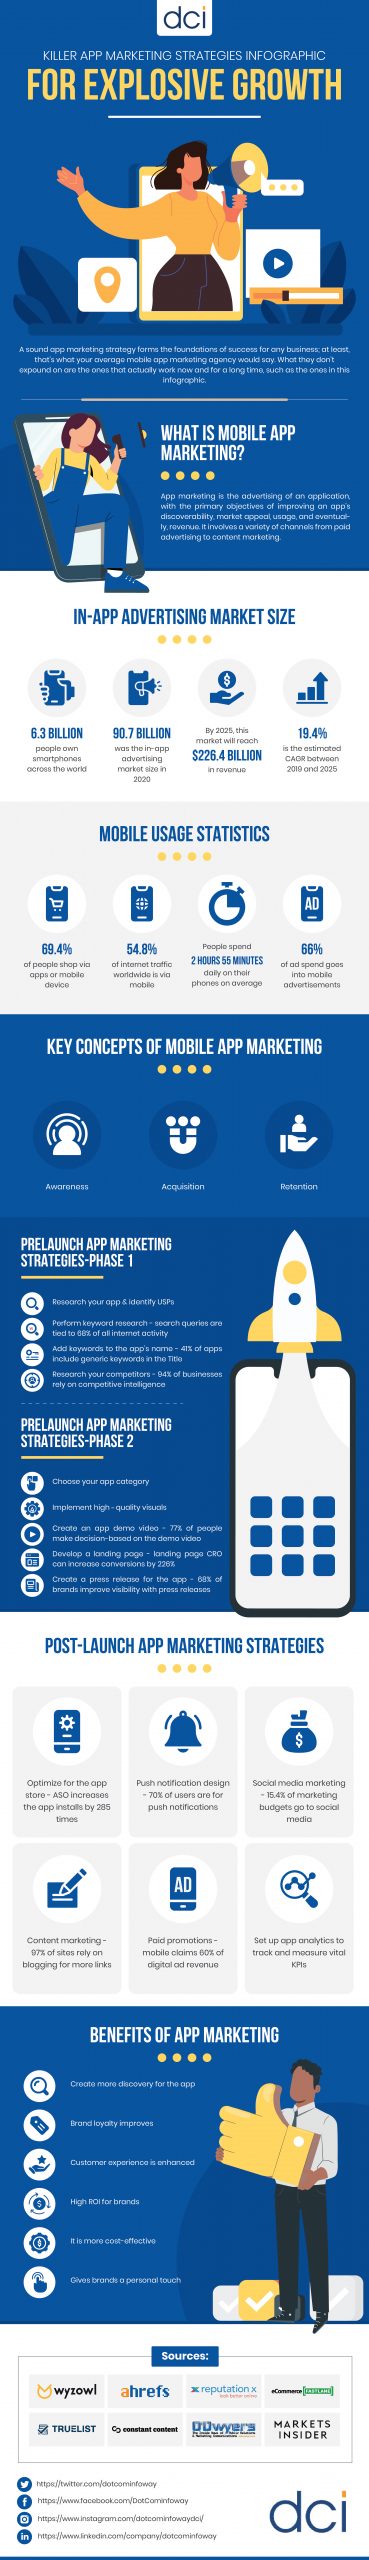 dci app marketing strategies infographic